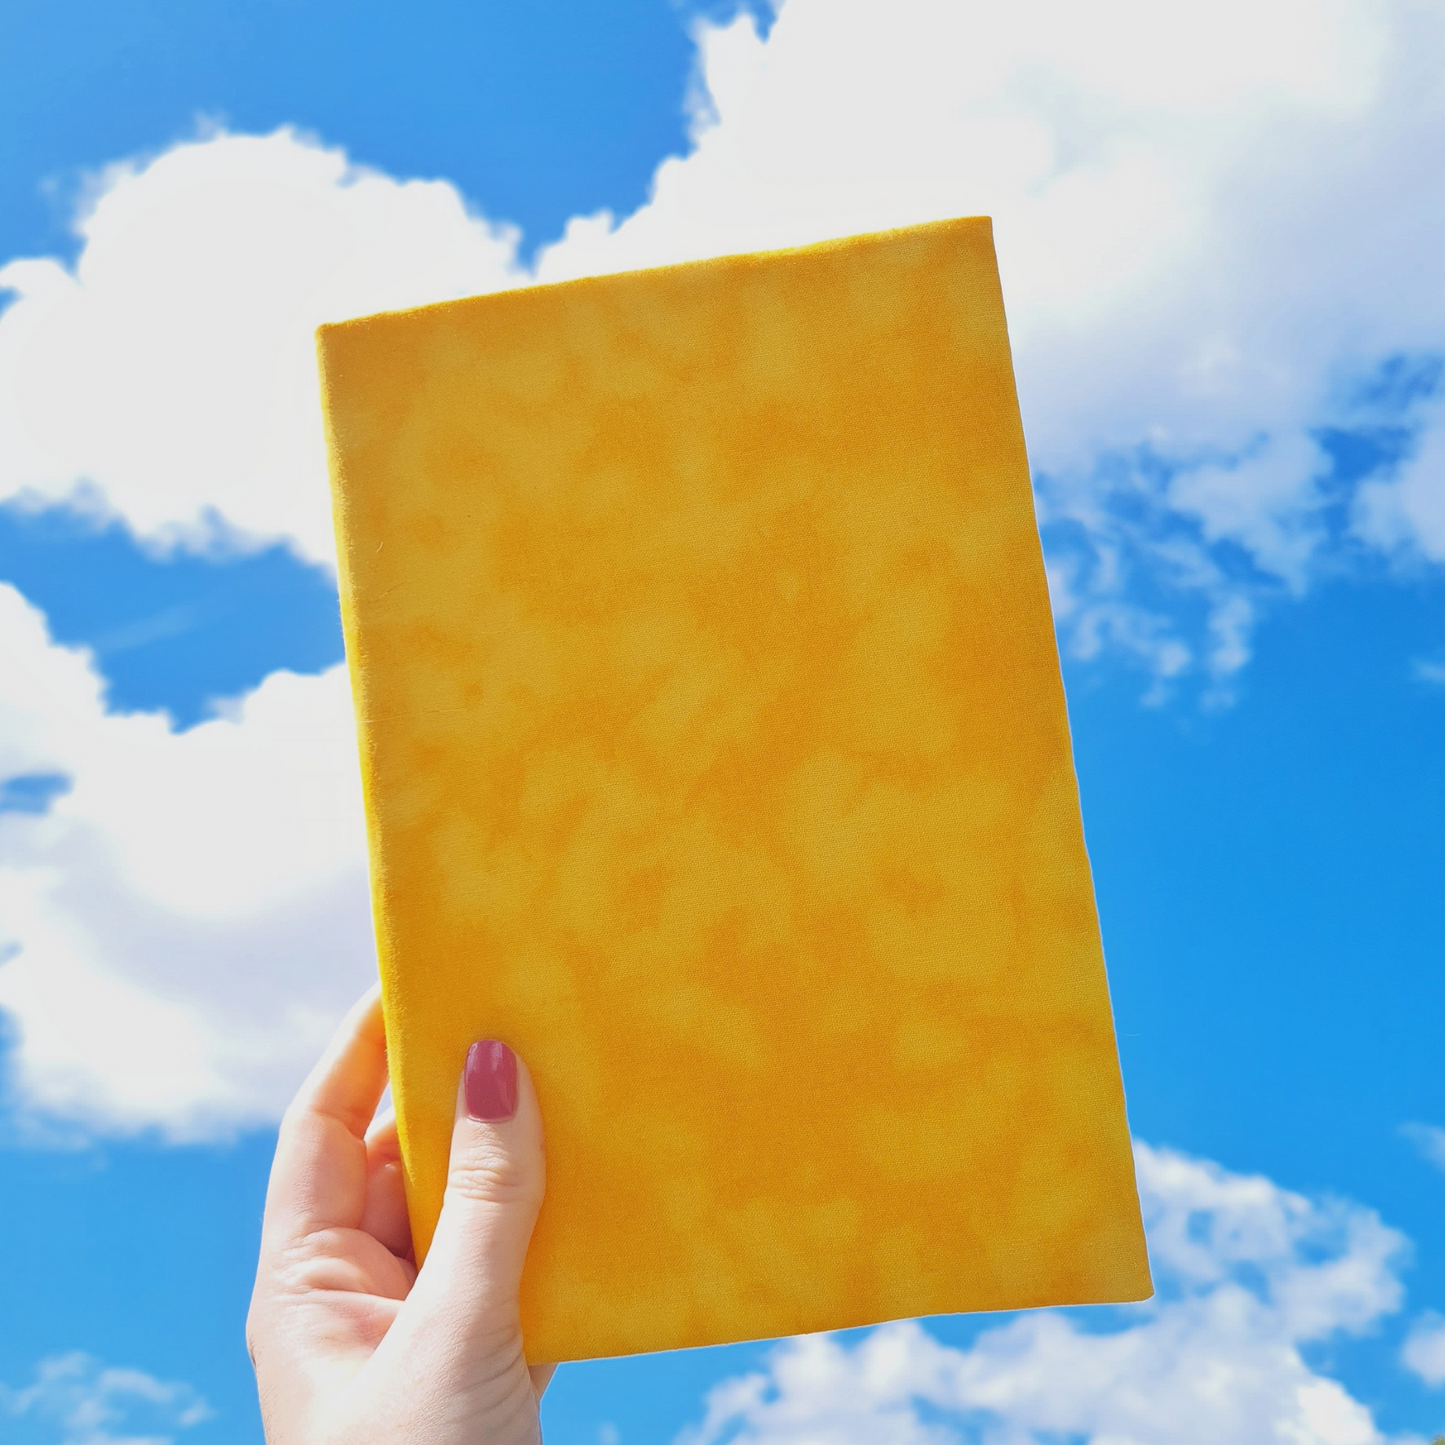 Sunshine Yellow fabric book cover